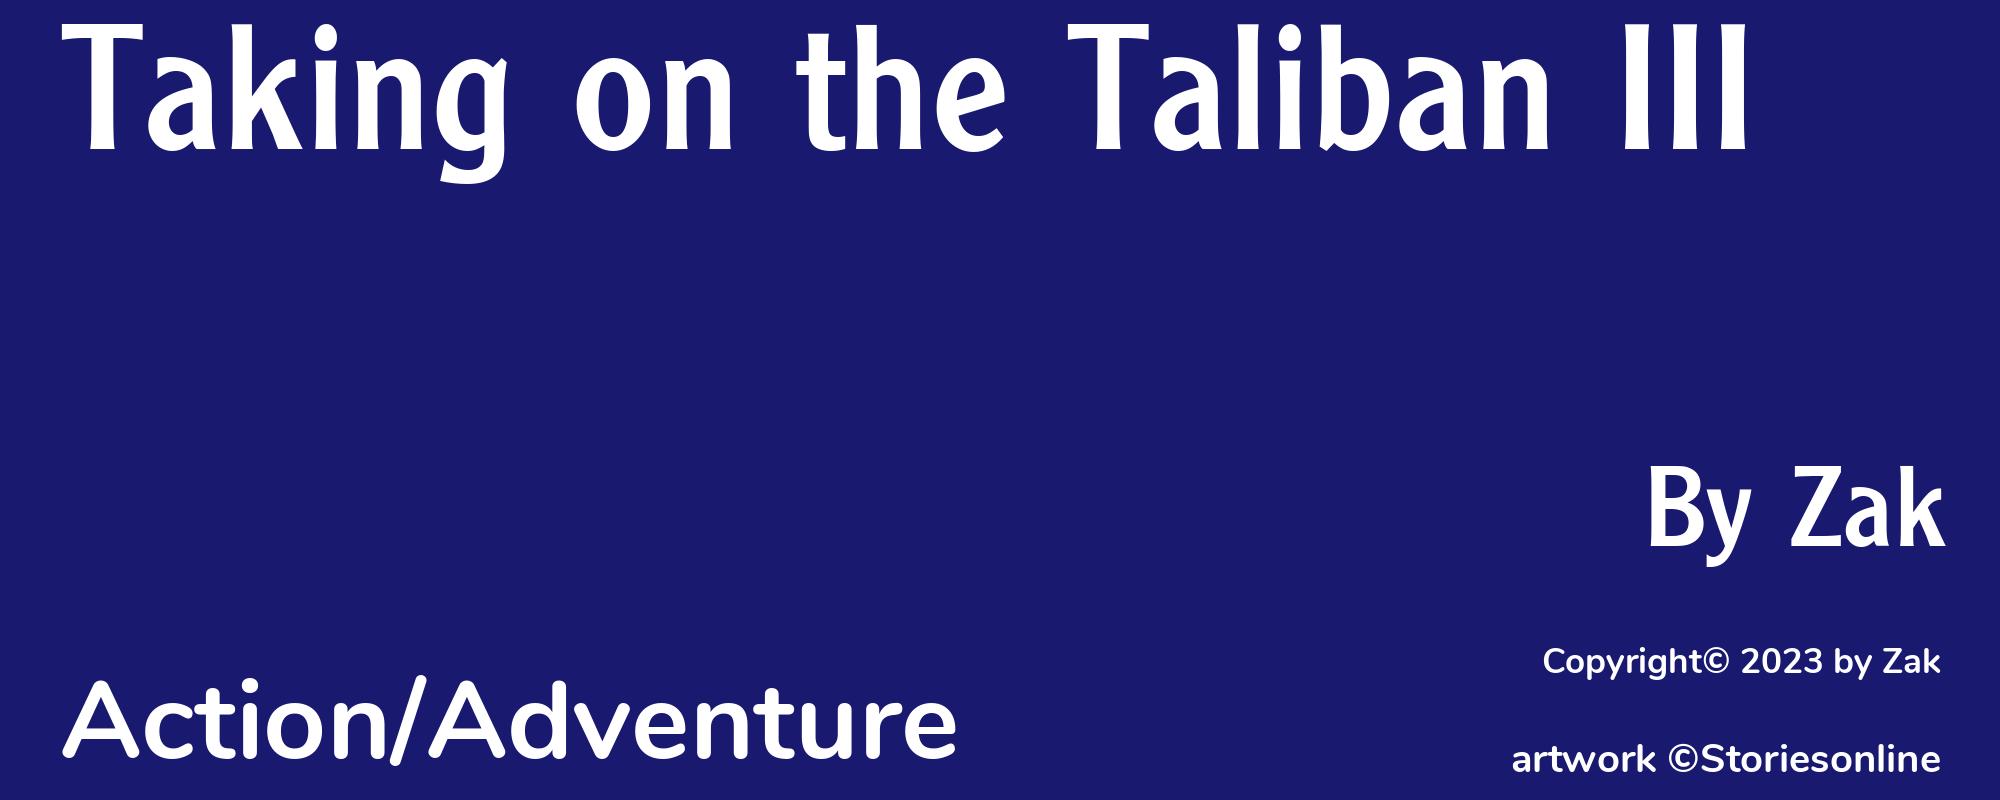 Taking on the Taliban III - Cover